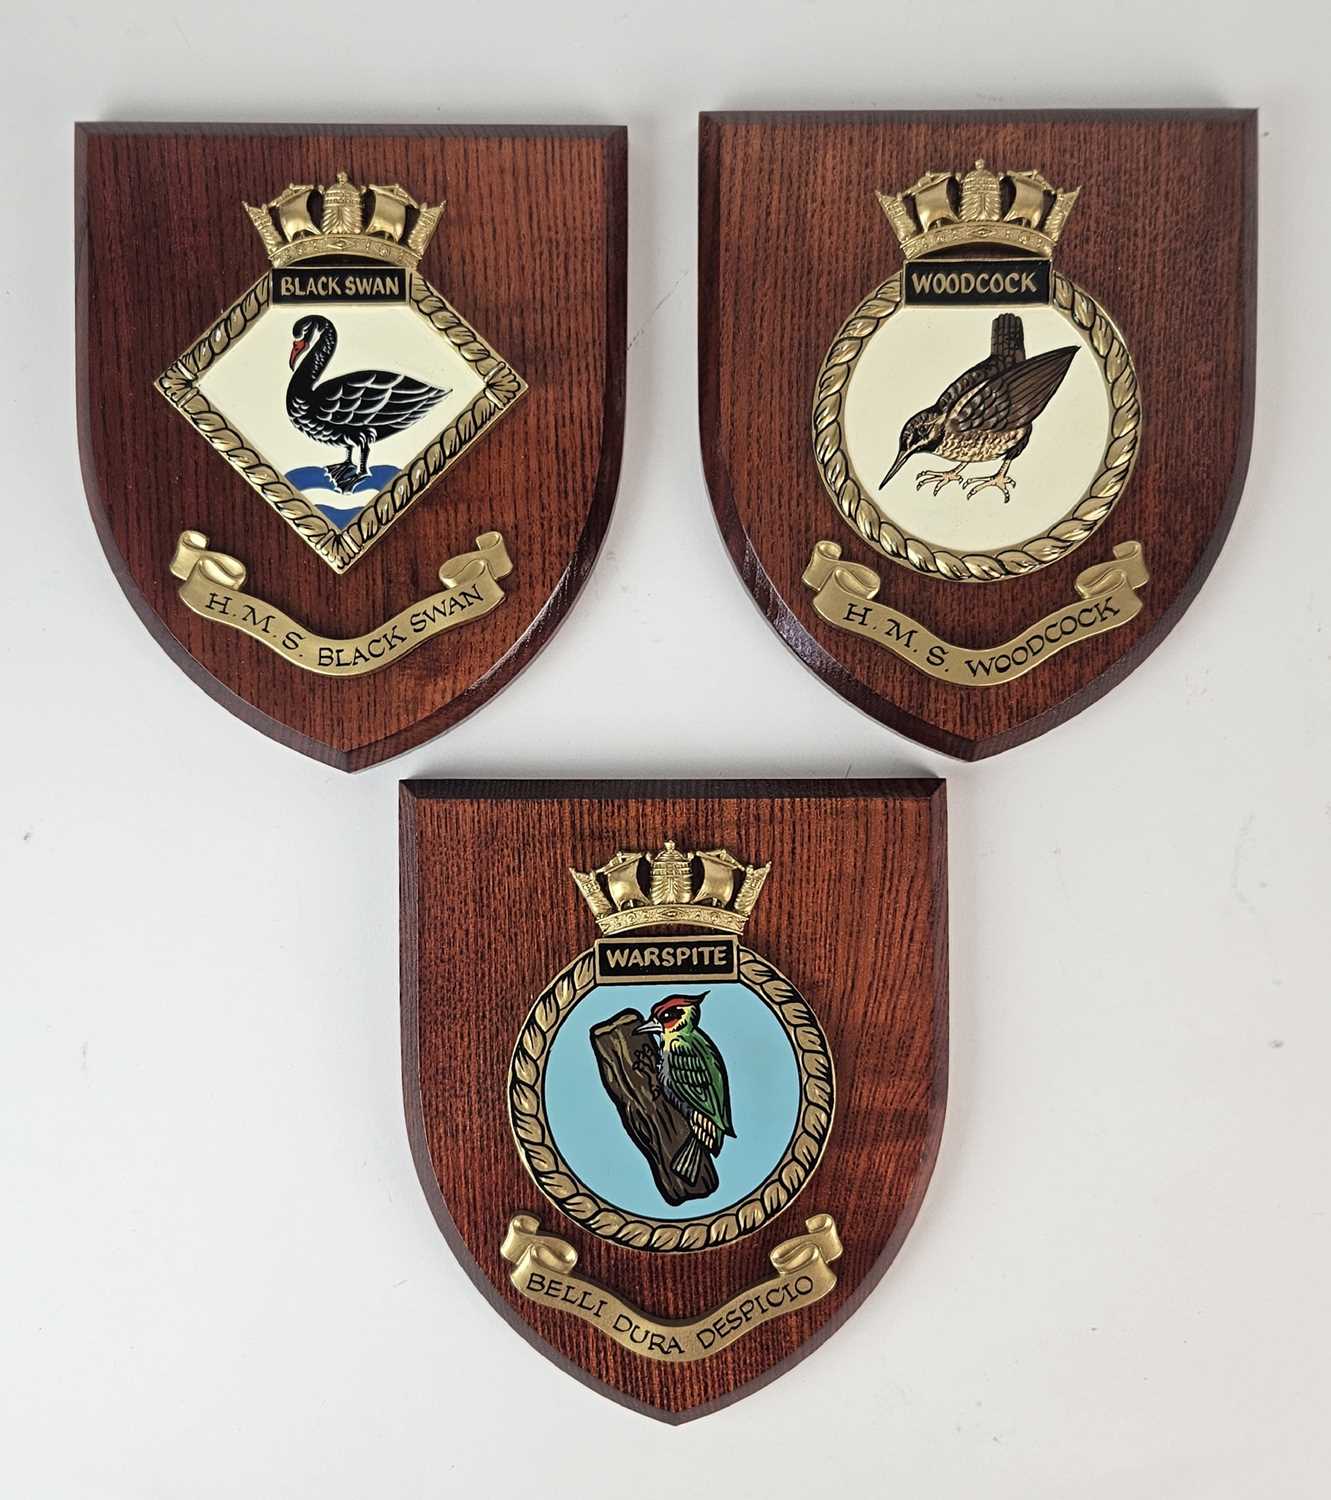 Three contemporary heraldry plaques for HMS Black Swan, HMS Woodcock and HMS Warspite, 15cm x 17cm